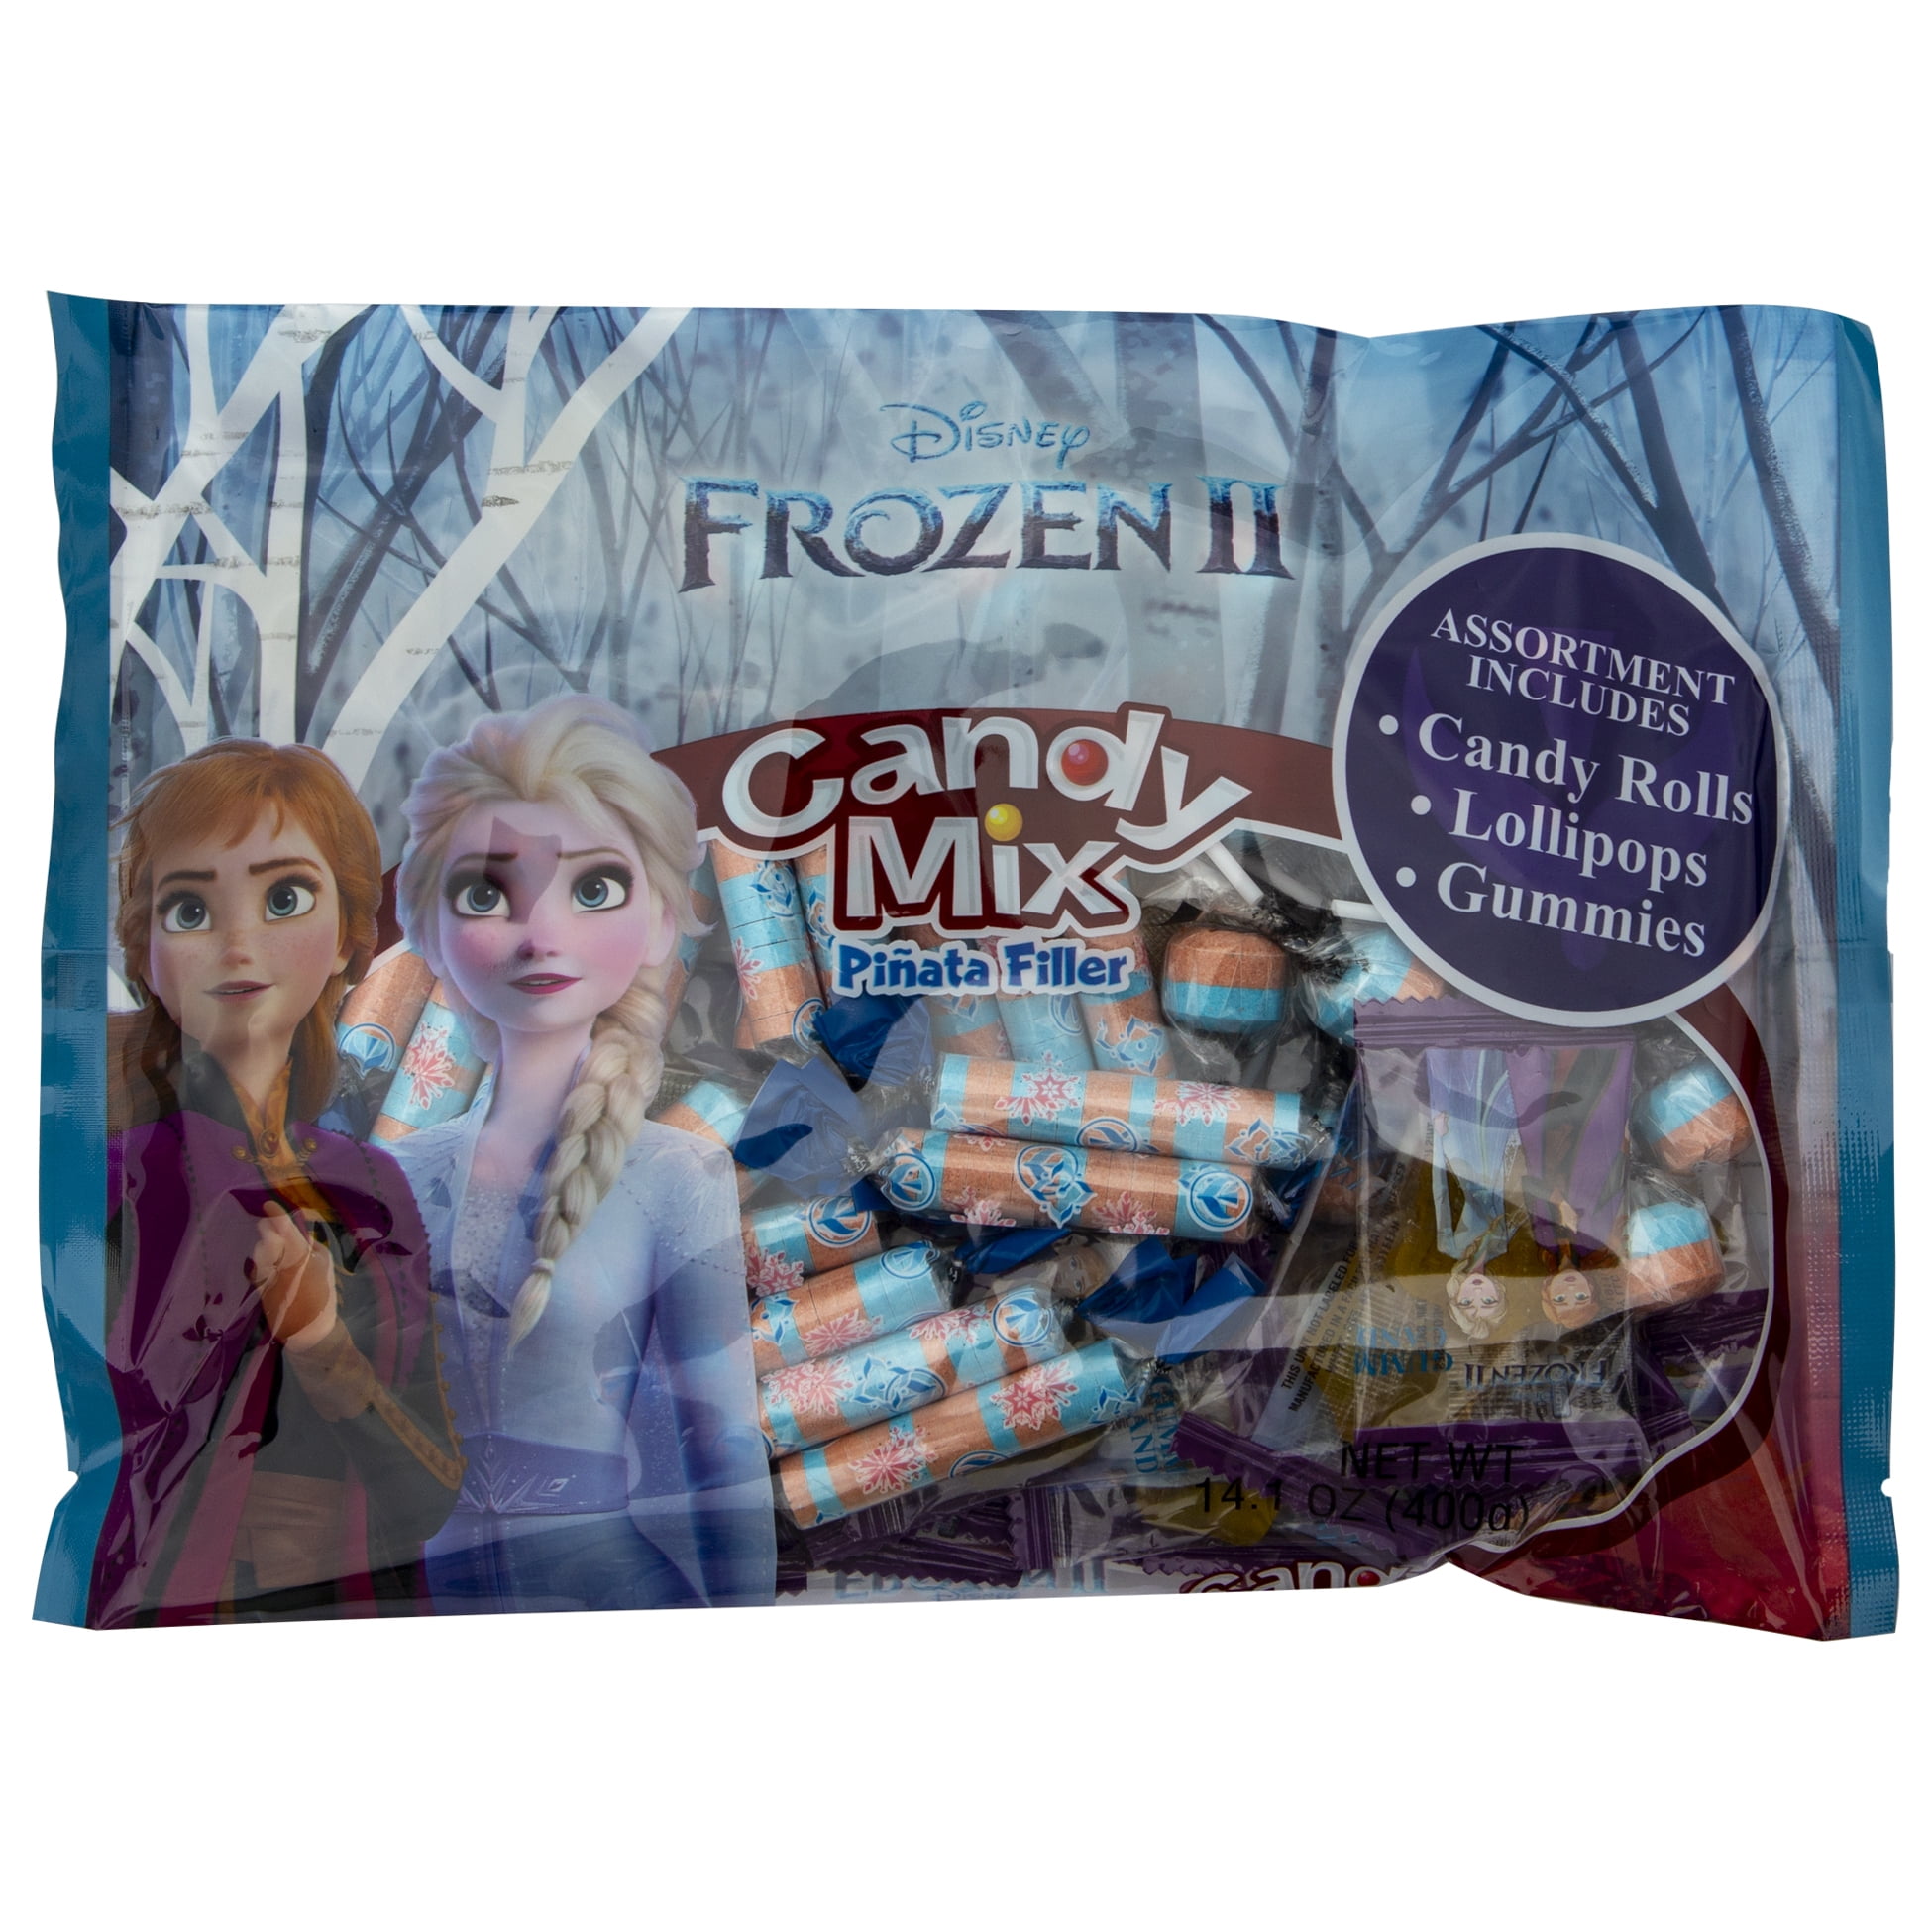 Frankford's Disney Frozen II Candy Mix Pinata Filler 14.1oz